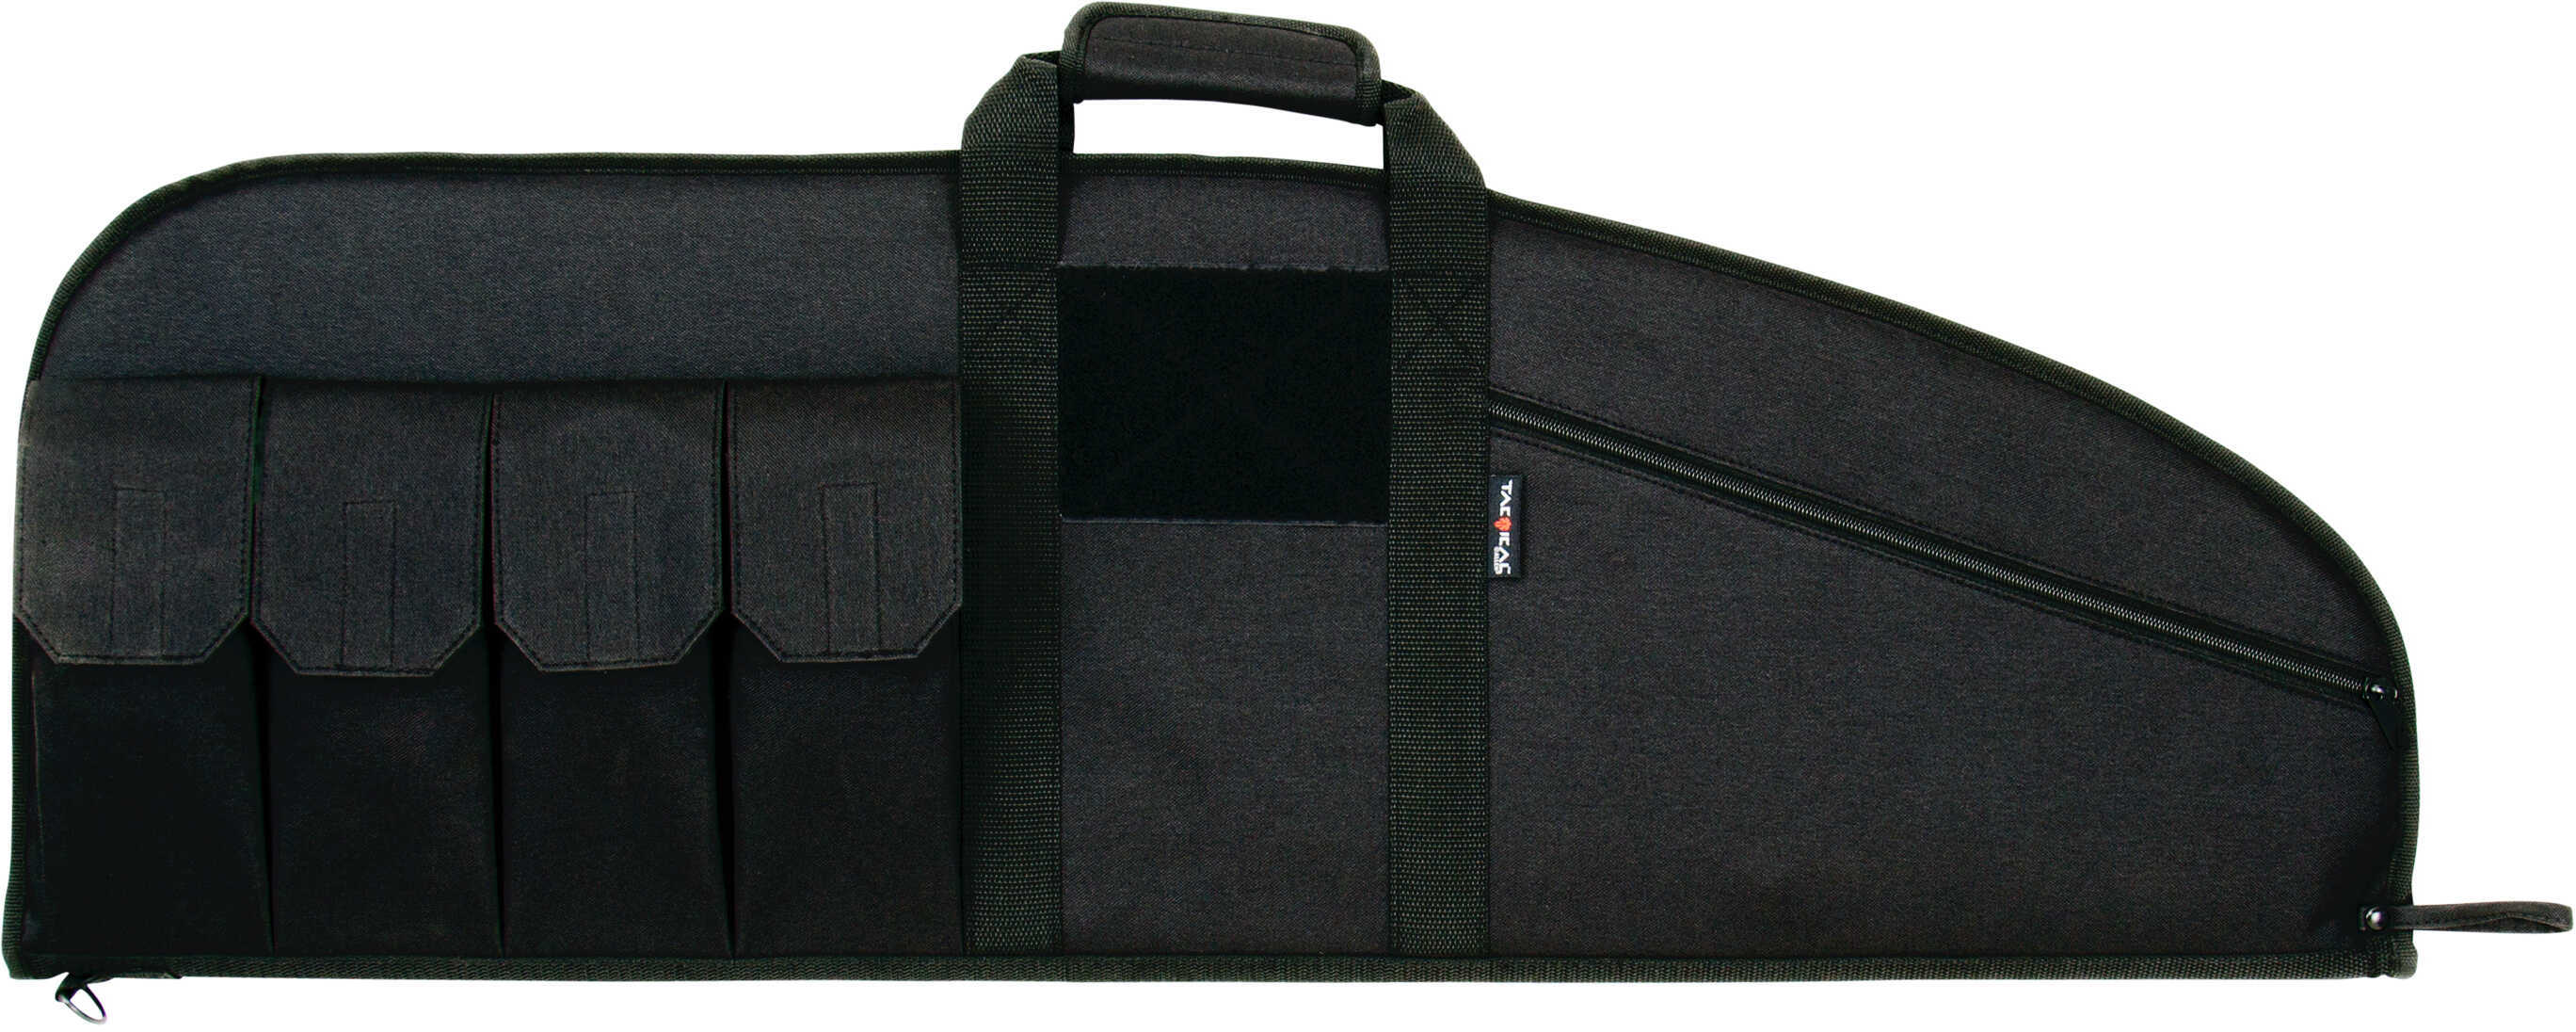 Allen Cases Tactical 37" Black With Pockets Model: 10642